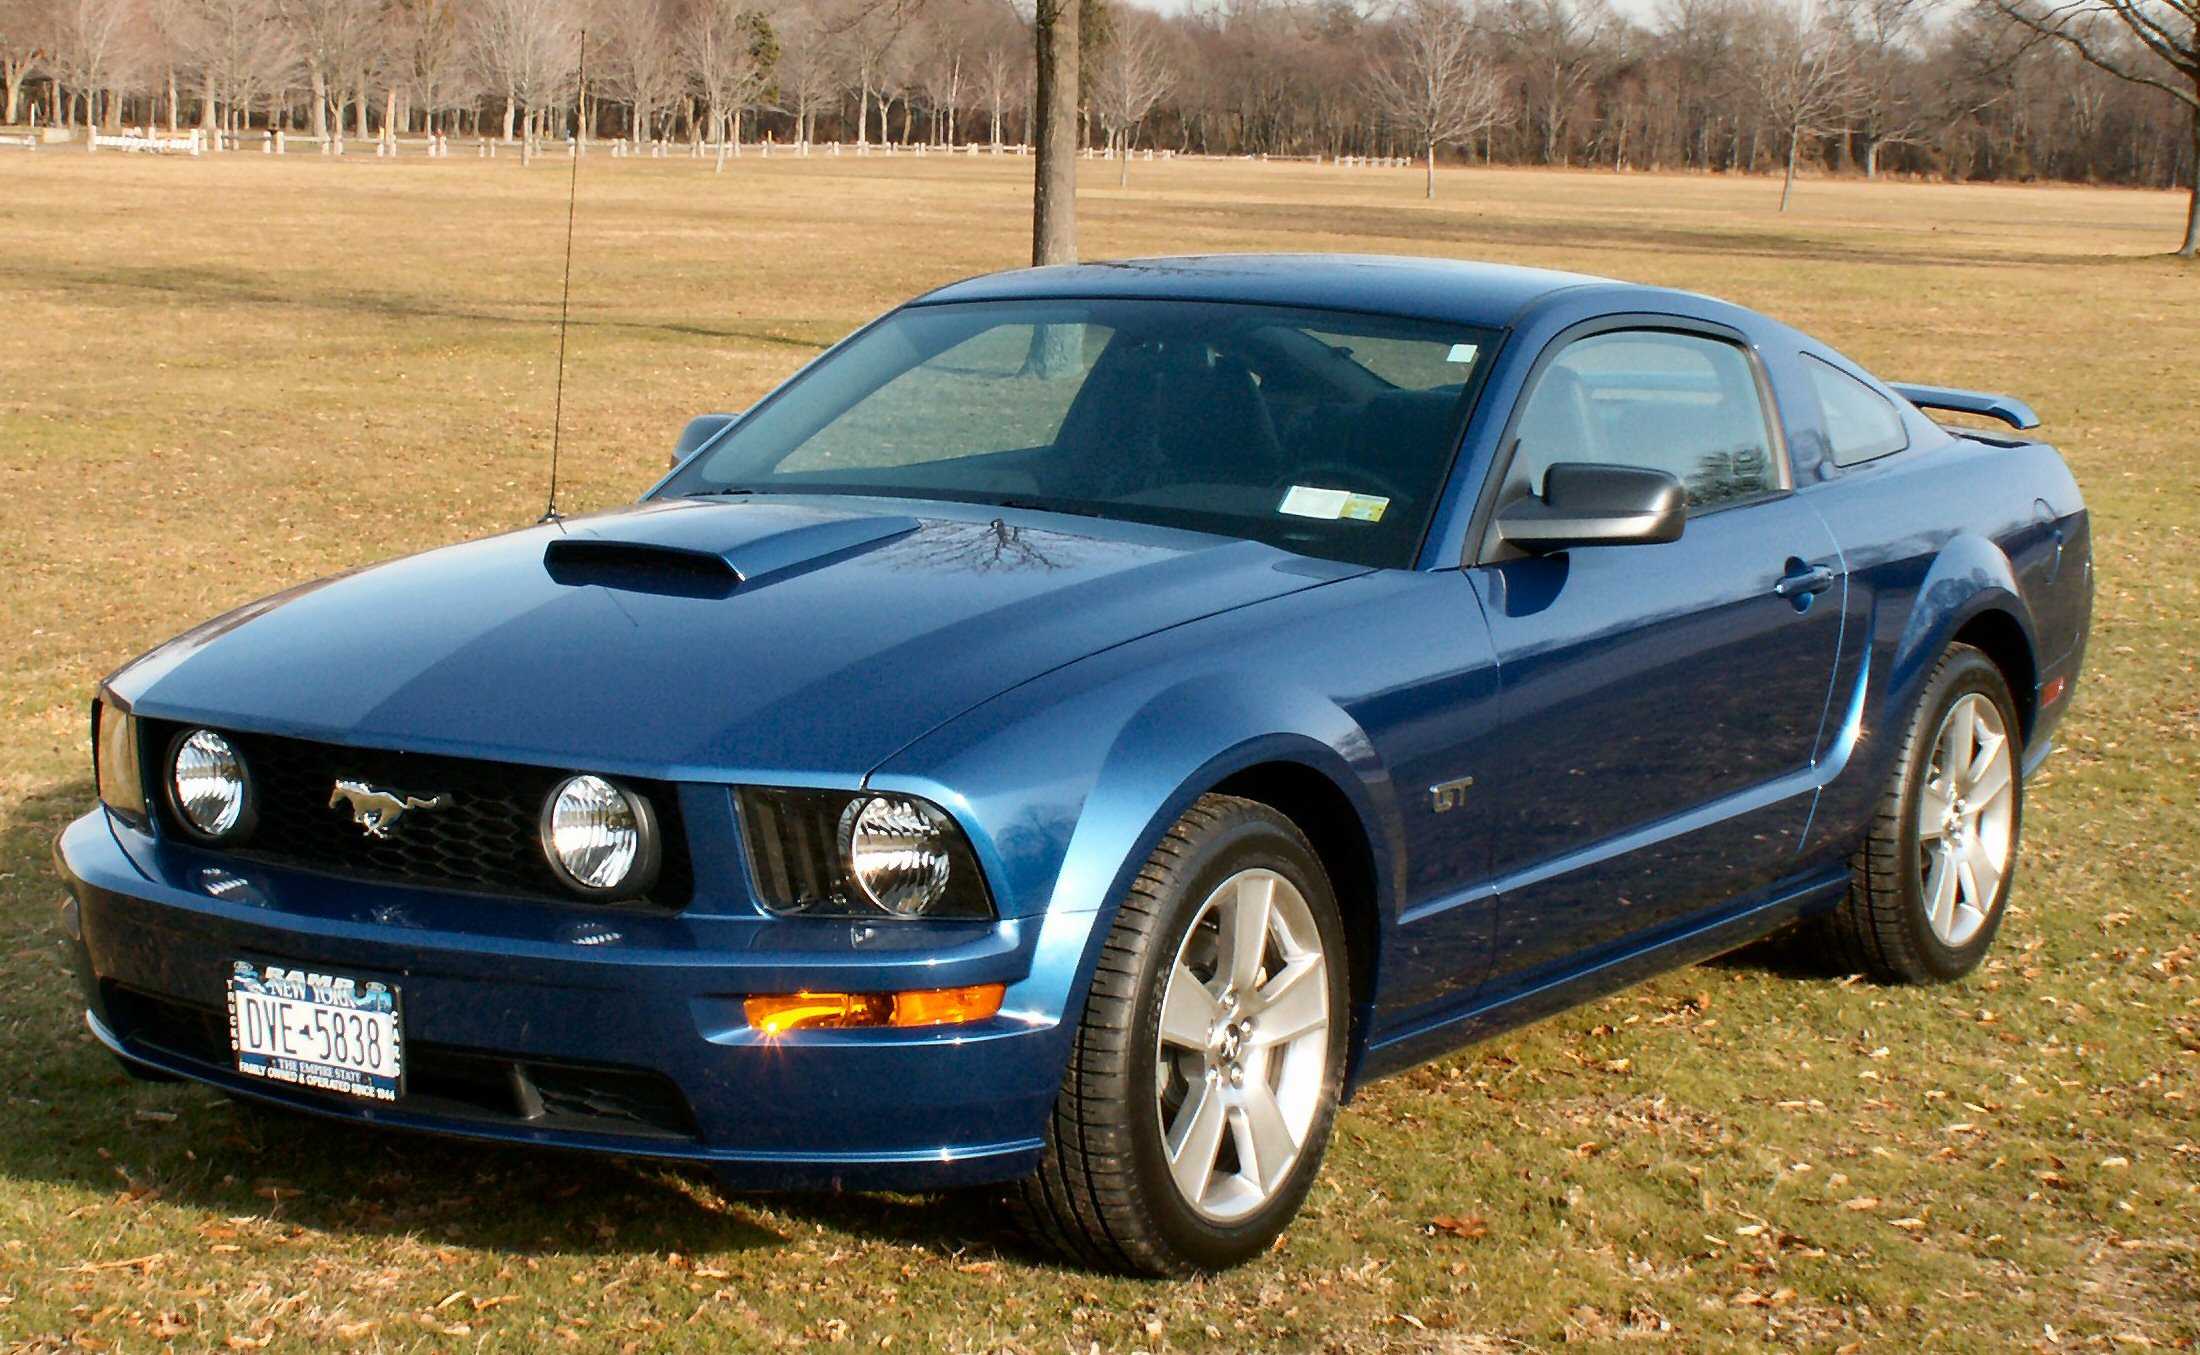 Продажа мустанг. Ford Mustang 2007. Mustang gt 2007. Ford Мустанг 2007. Форд Мустанг кабриолет 2007.